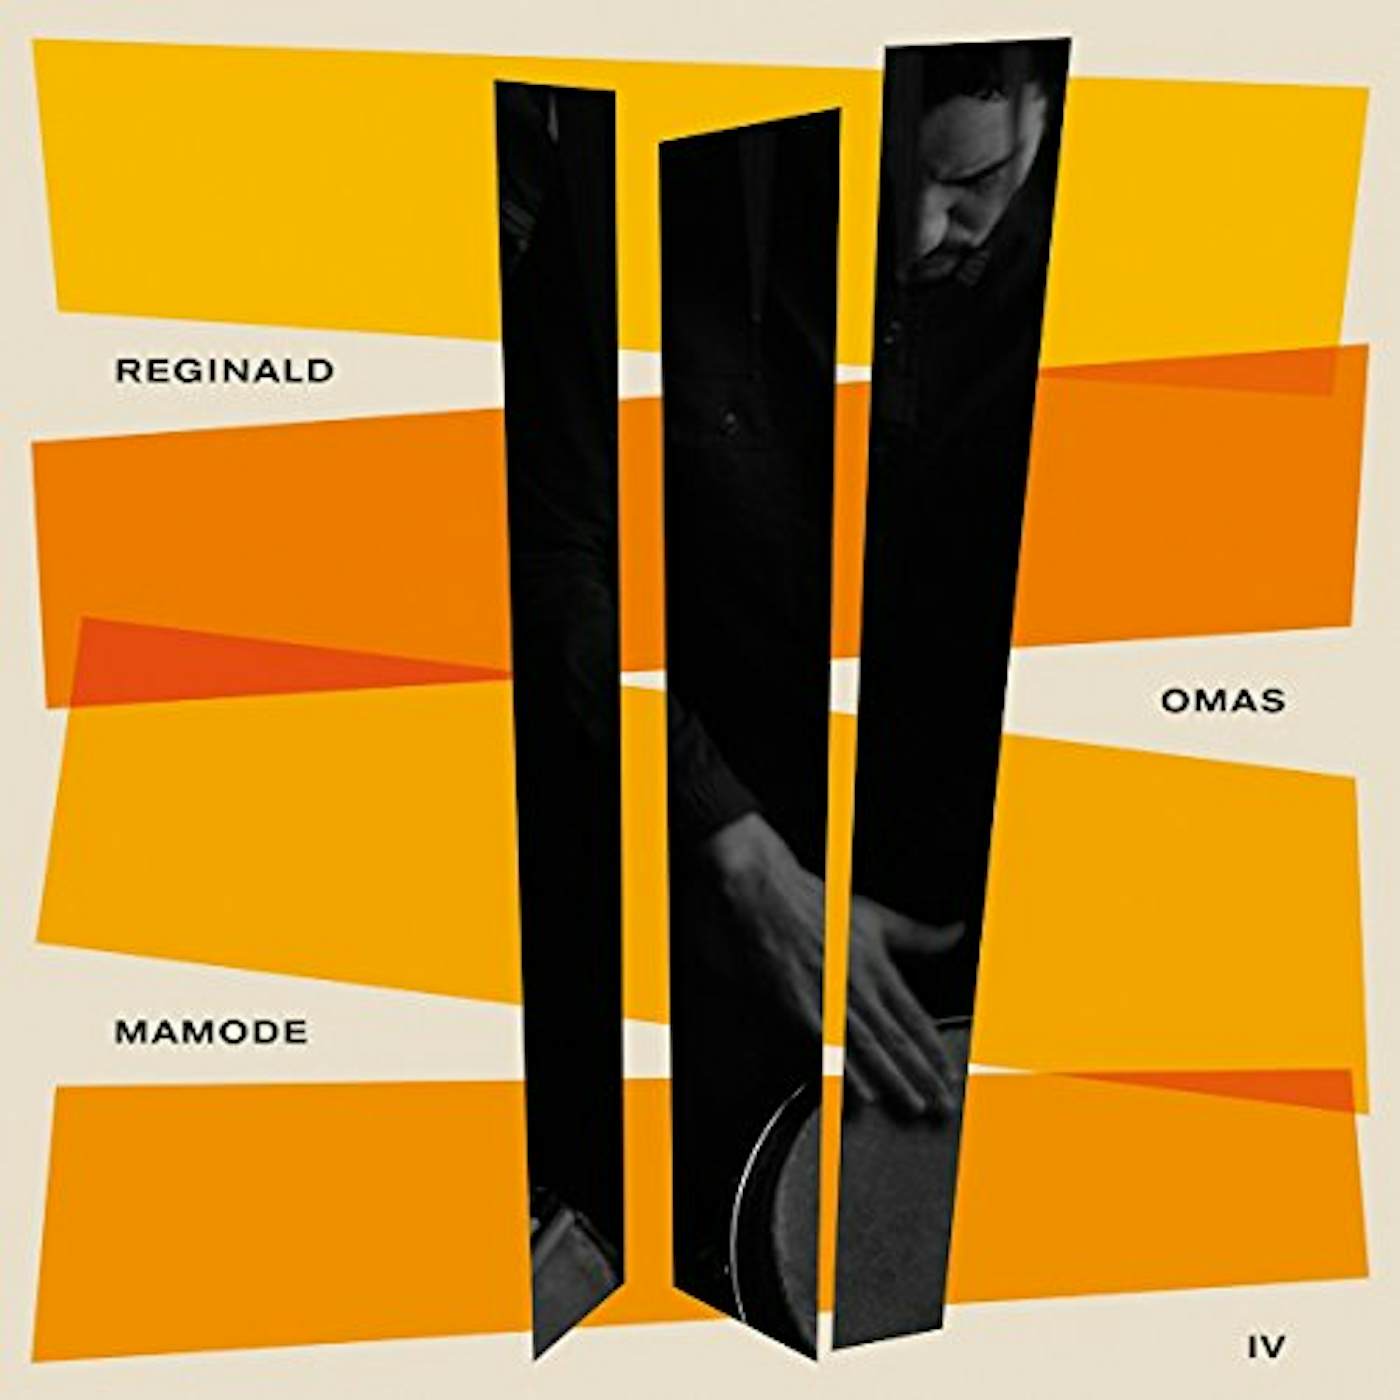 REGINALD OMAS MAMODE IV Vinyl Record - UK Release